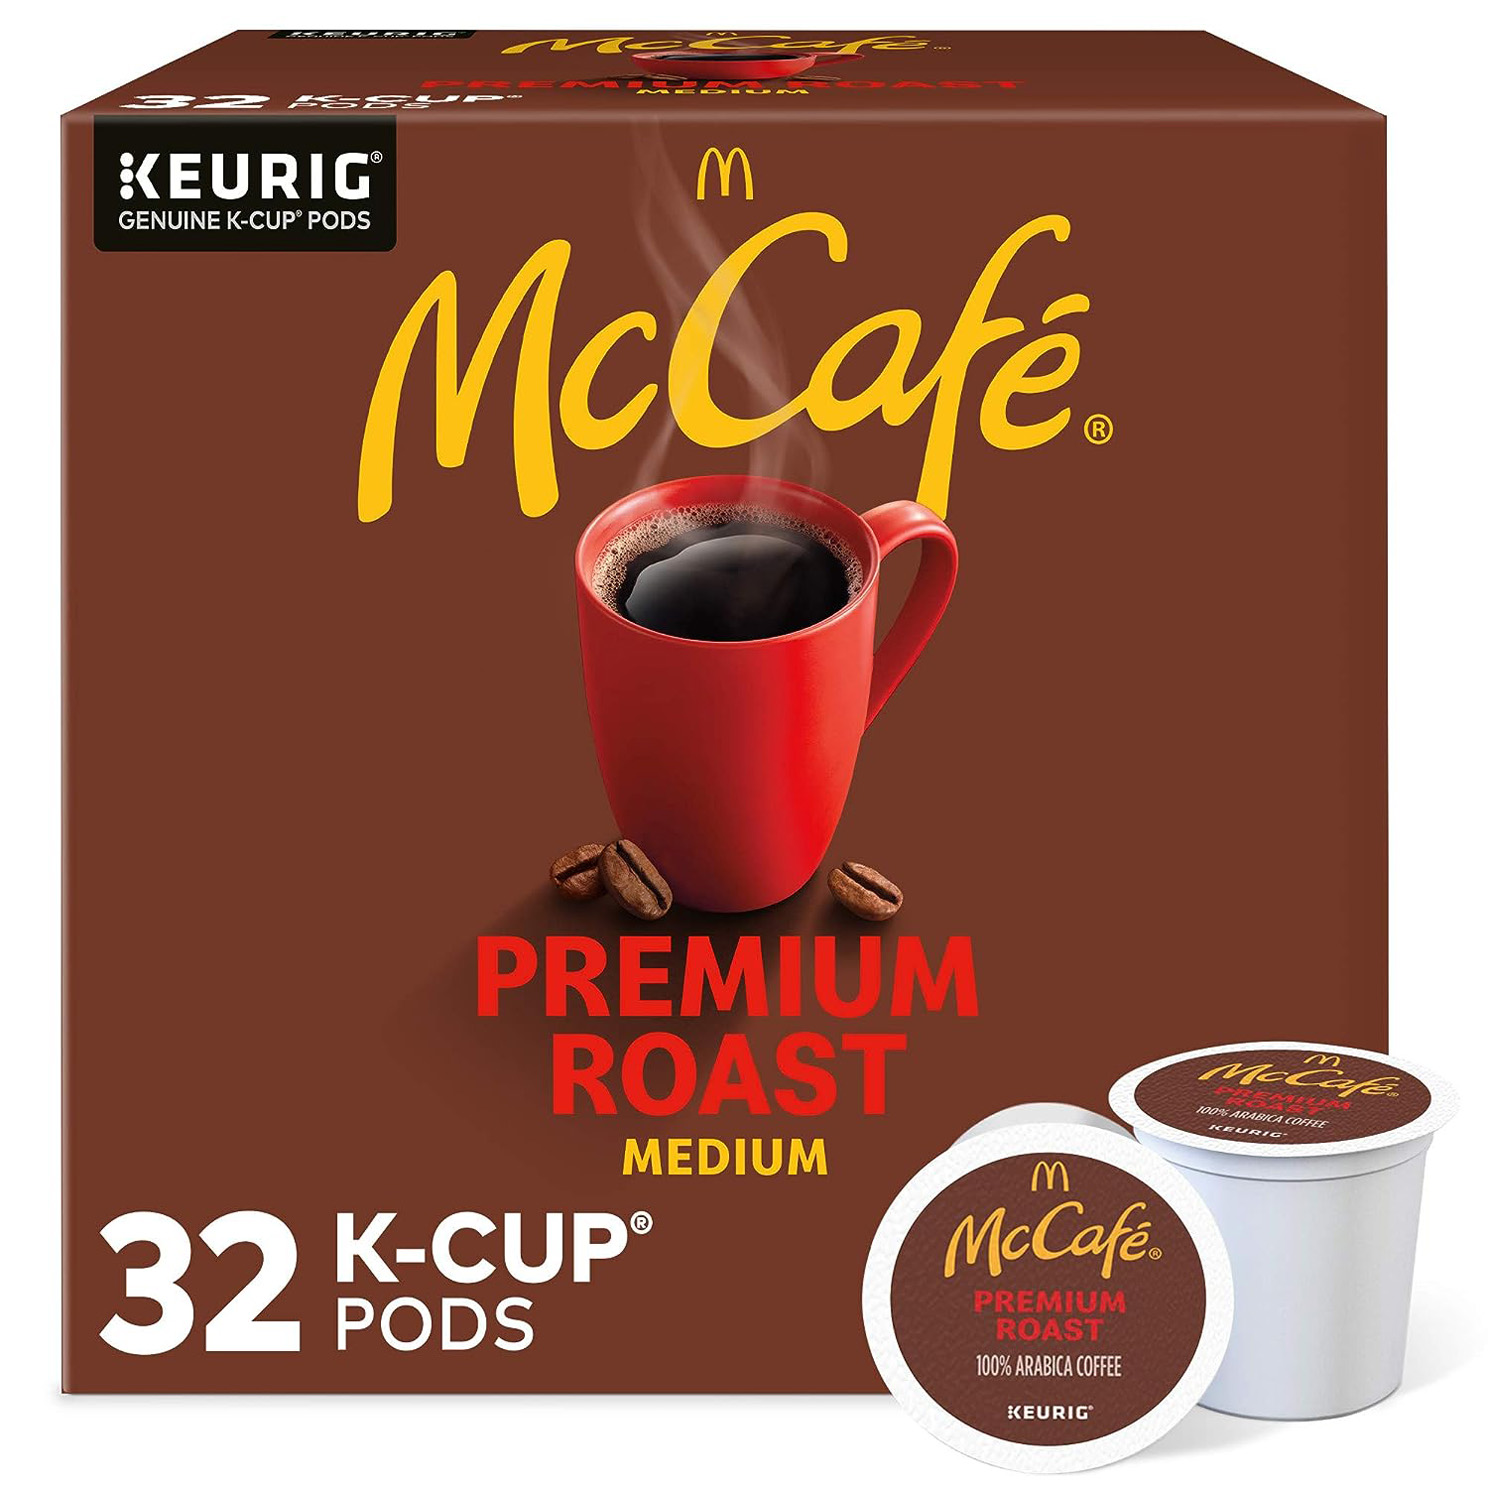 McCafe Premium Medium Roast K-Cup Coffee Pods (32 Pods) For Keurig Brewers